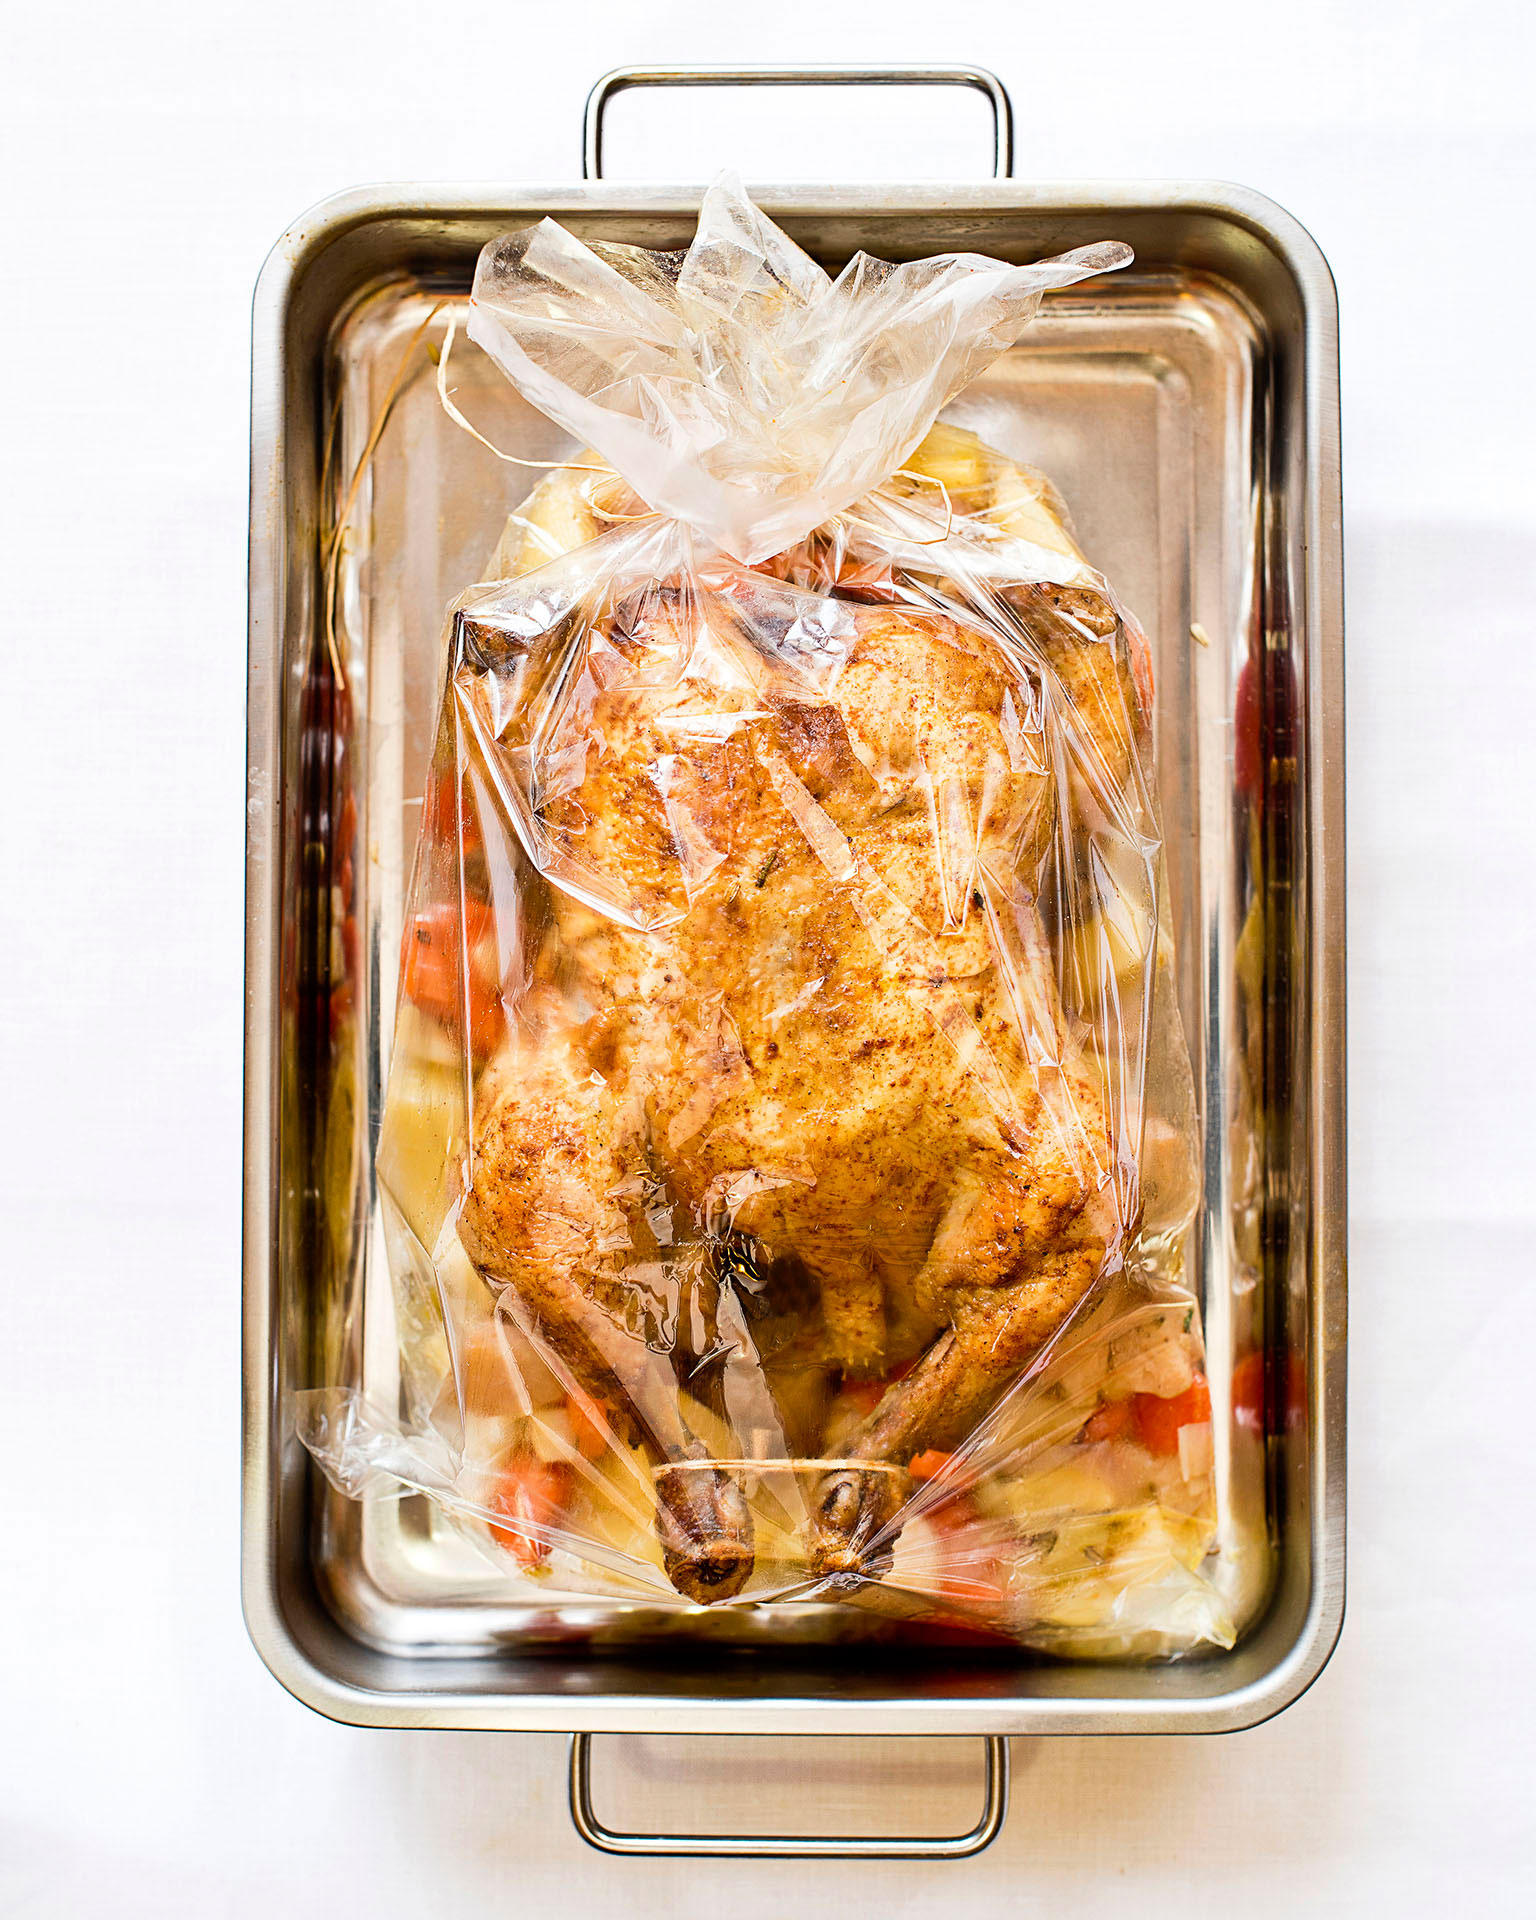 Moral education course Spider Kοτόπουλο, στη σακούλα με λαχανικά | ΣΥΝΤΑΓΗ | Gastronomos.gr